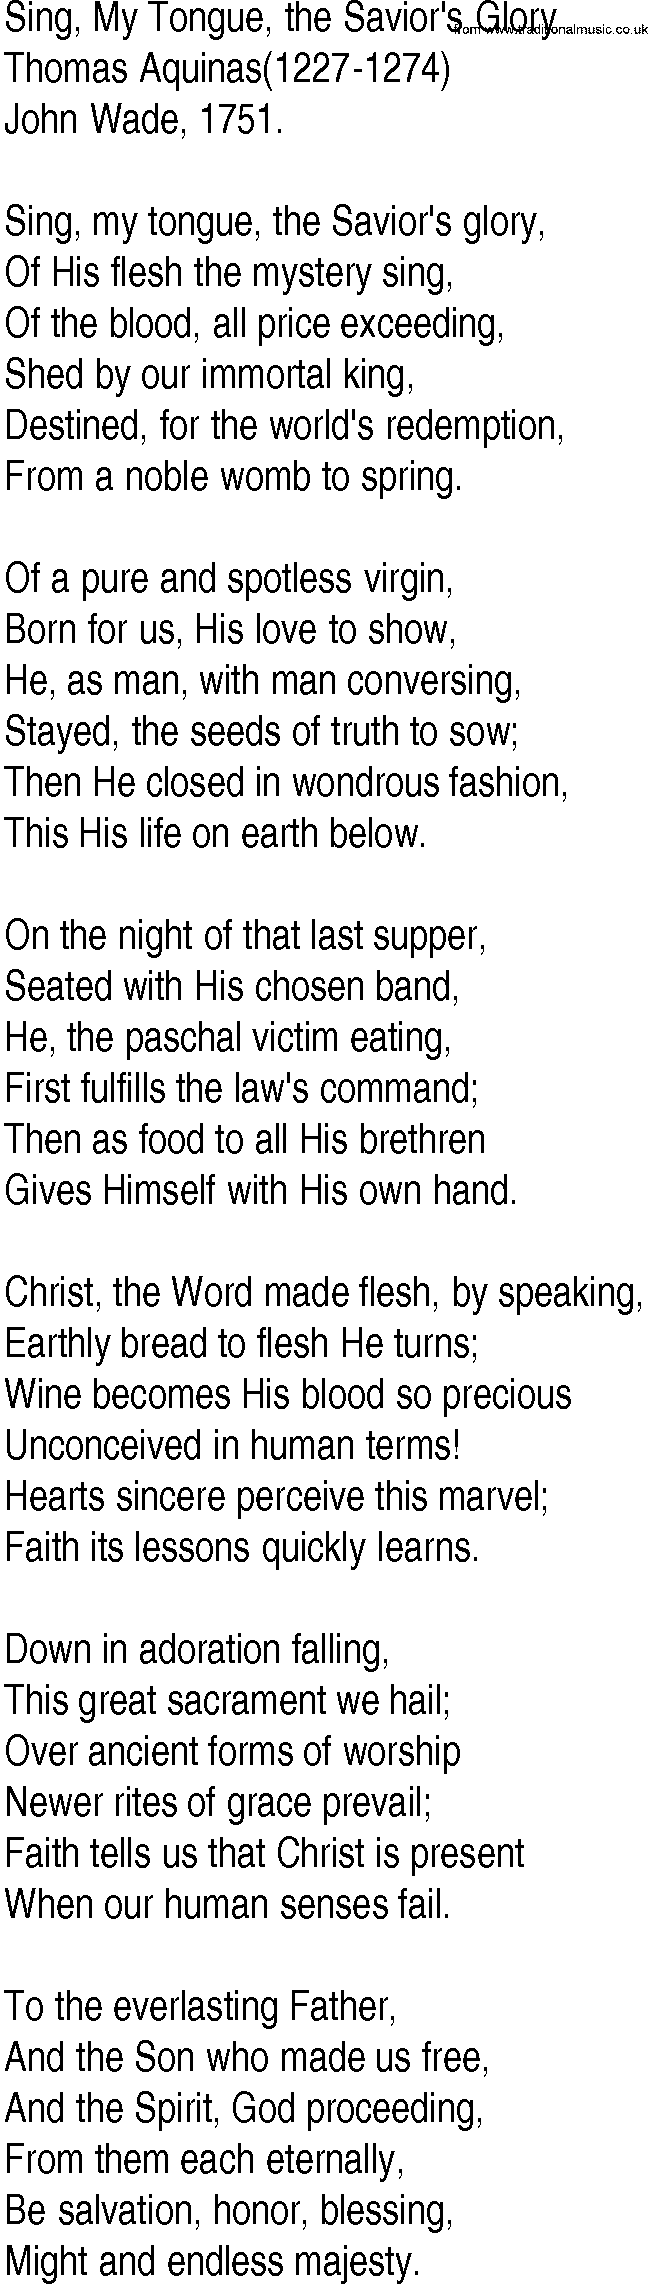 Hymn and Gospel Song: Sing, My Tongue, the Savior's Glory by Thomas Aquinas lyrics